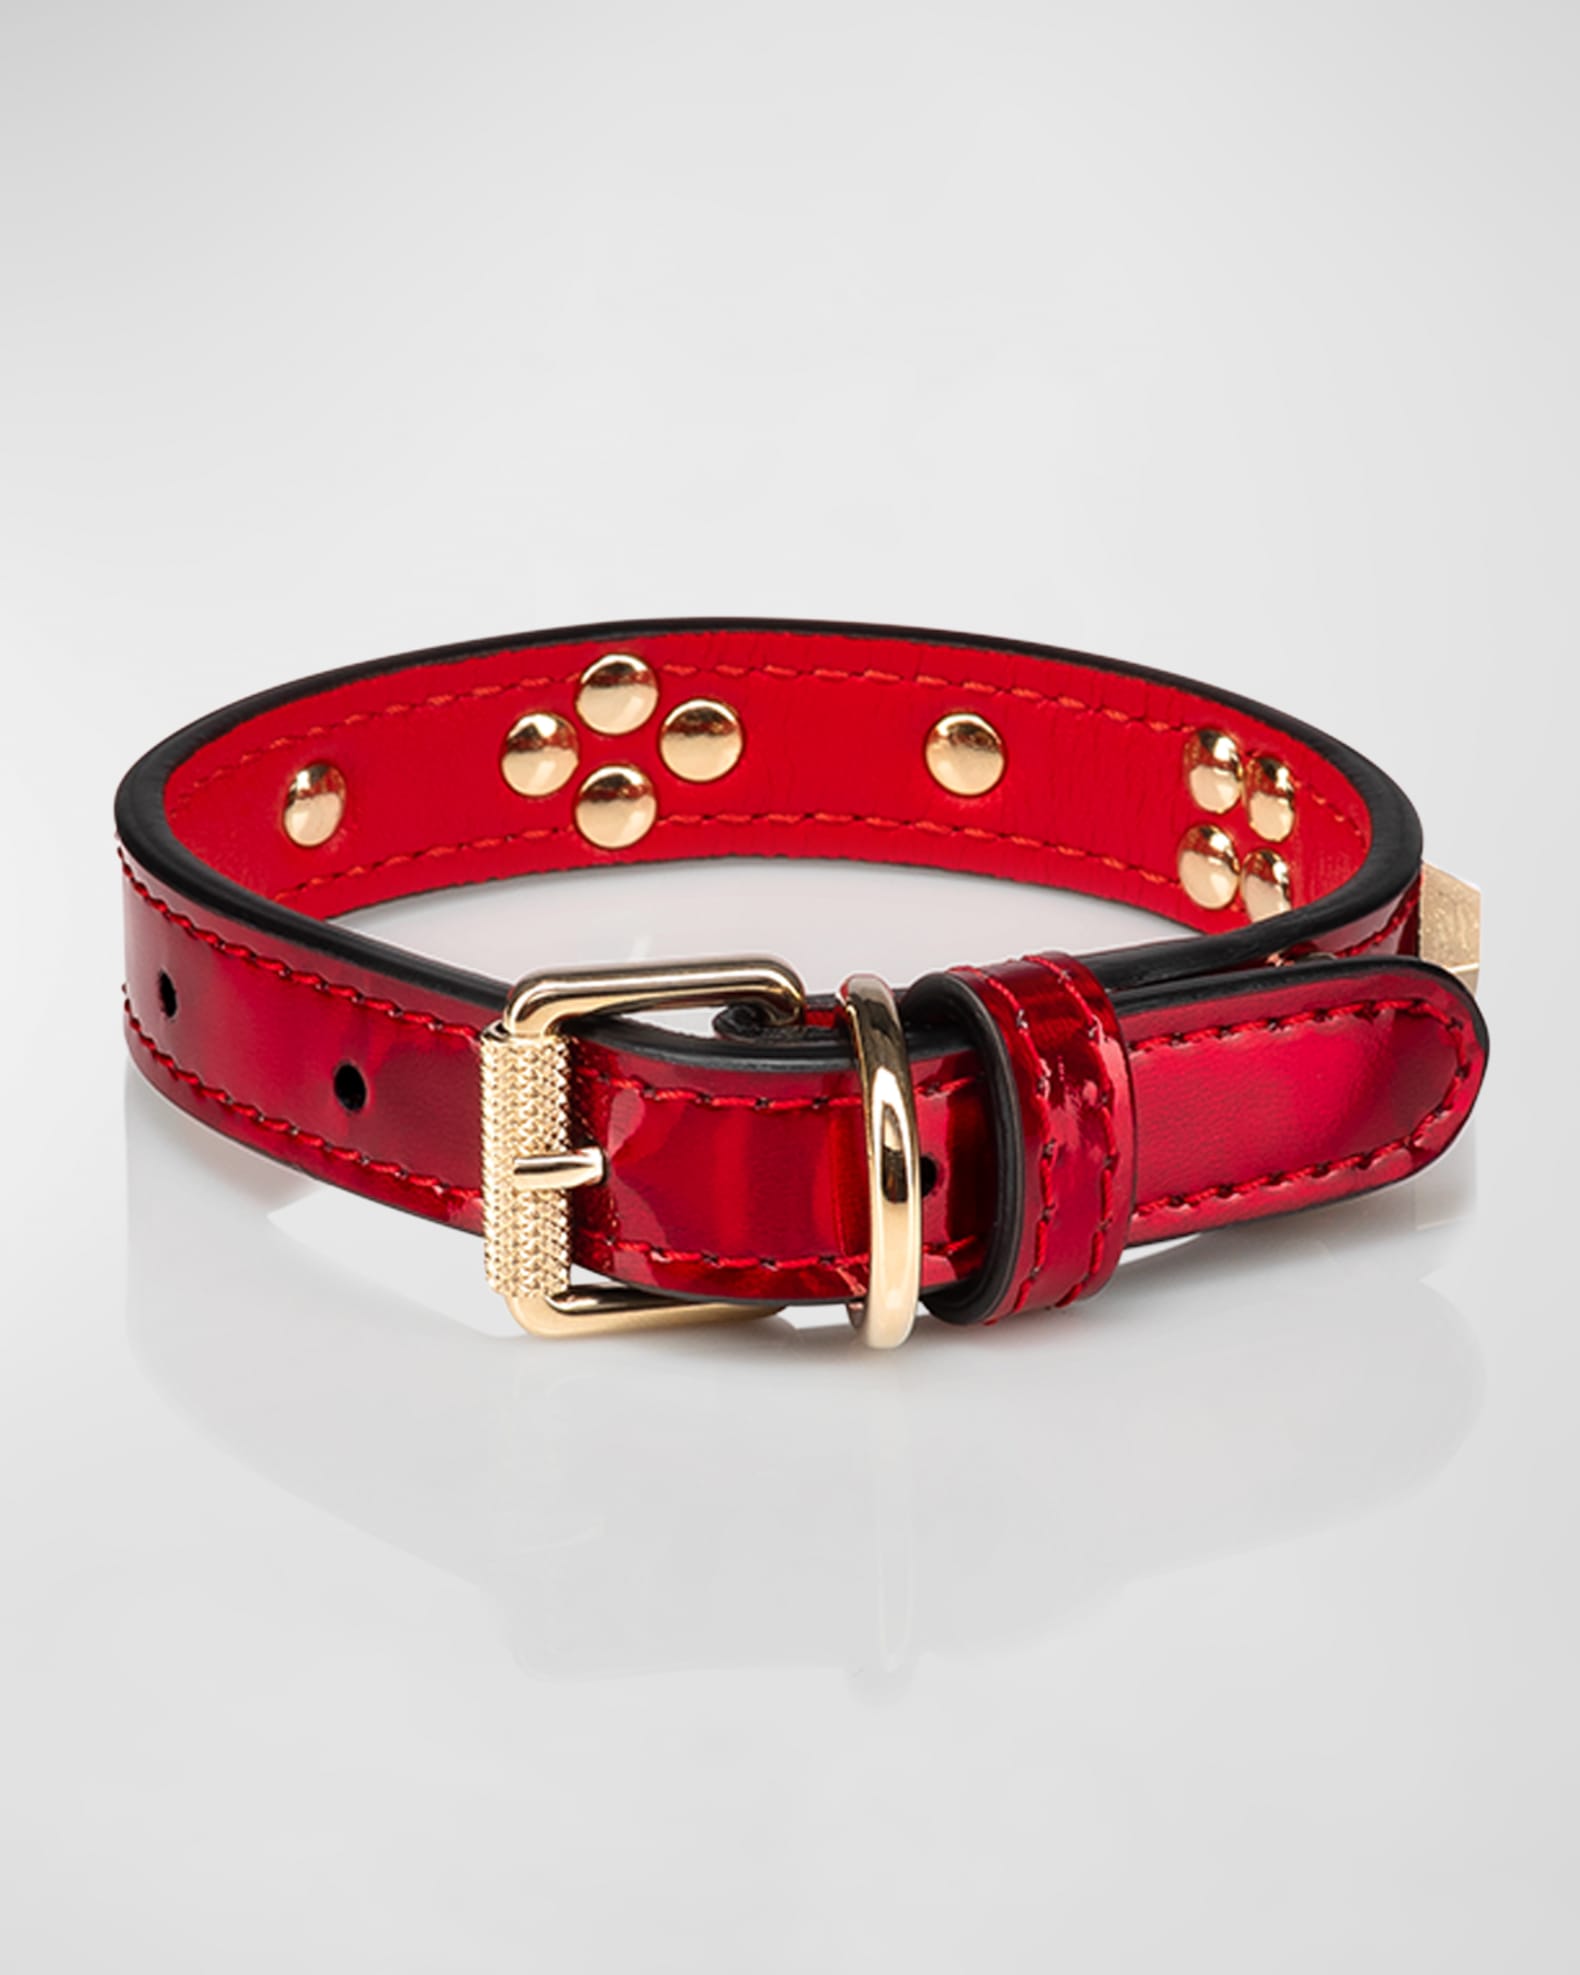 Designer dog collar - Christian Louboutin United States